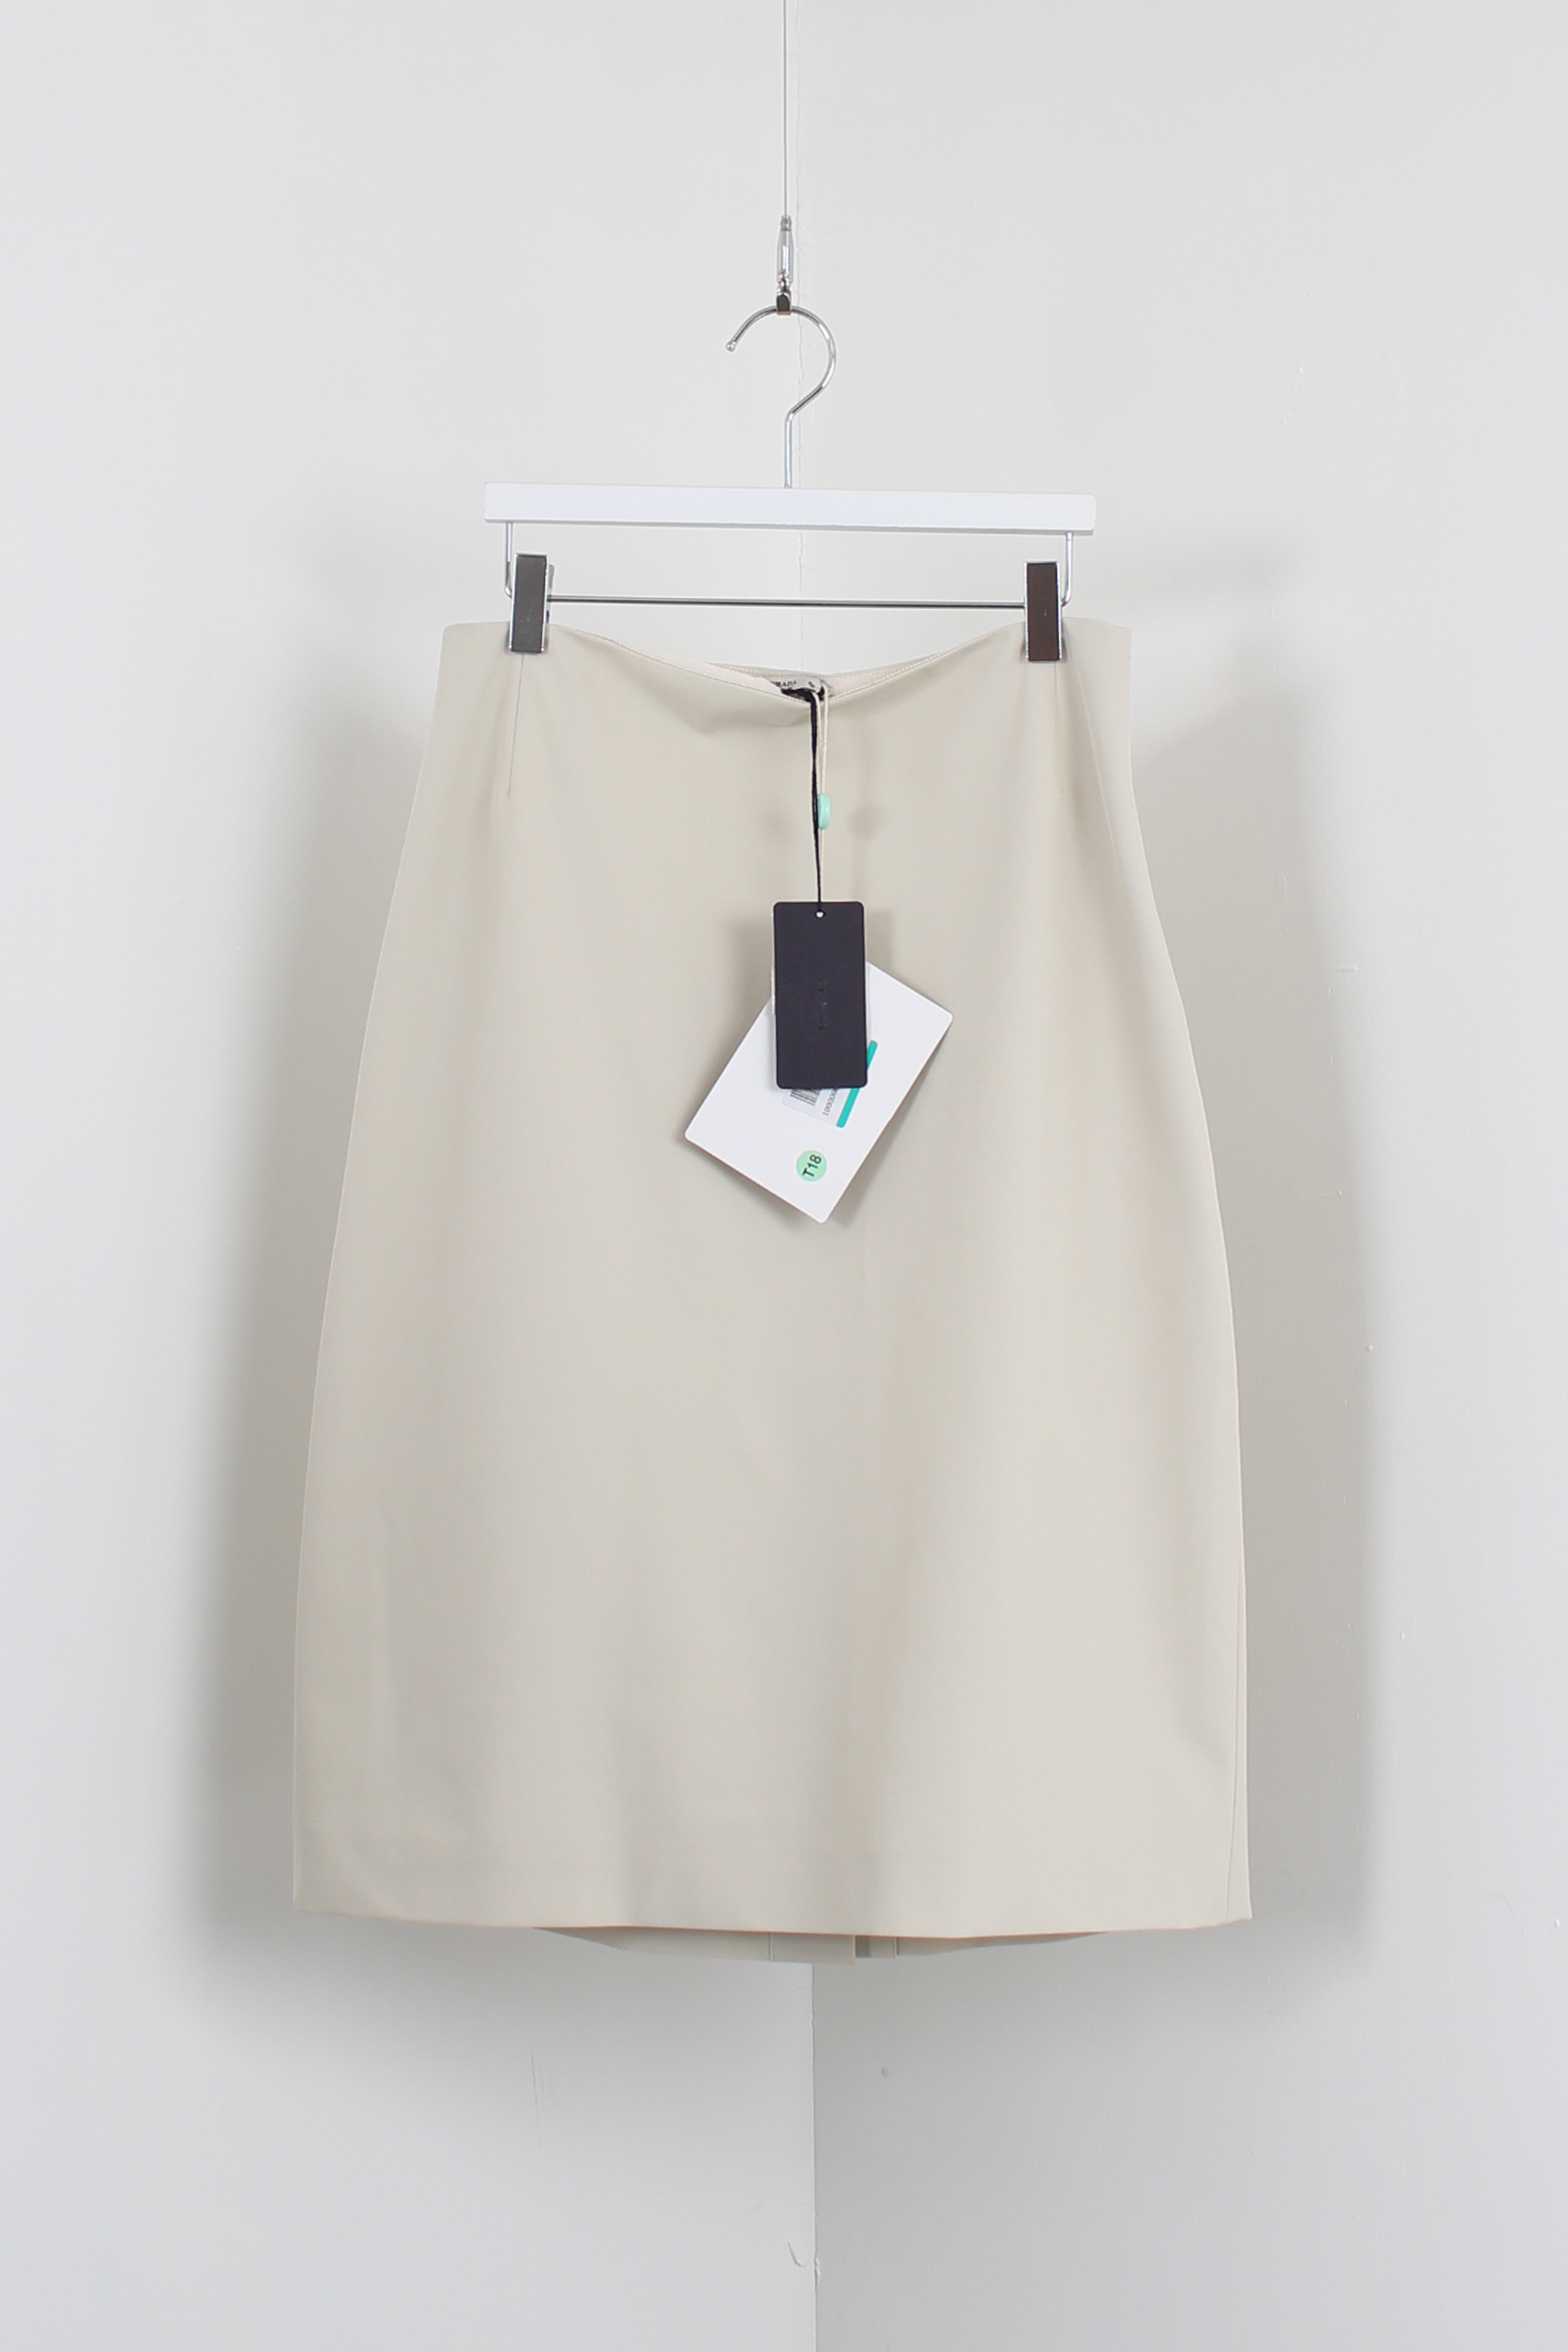 PRADA skirt